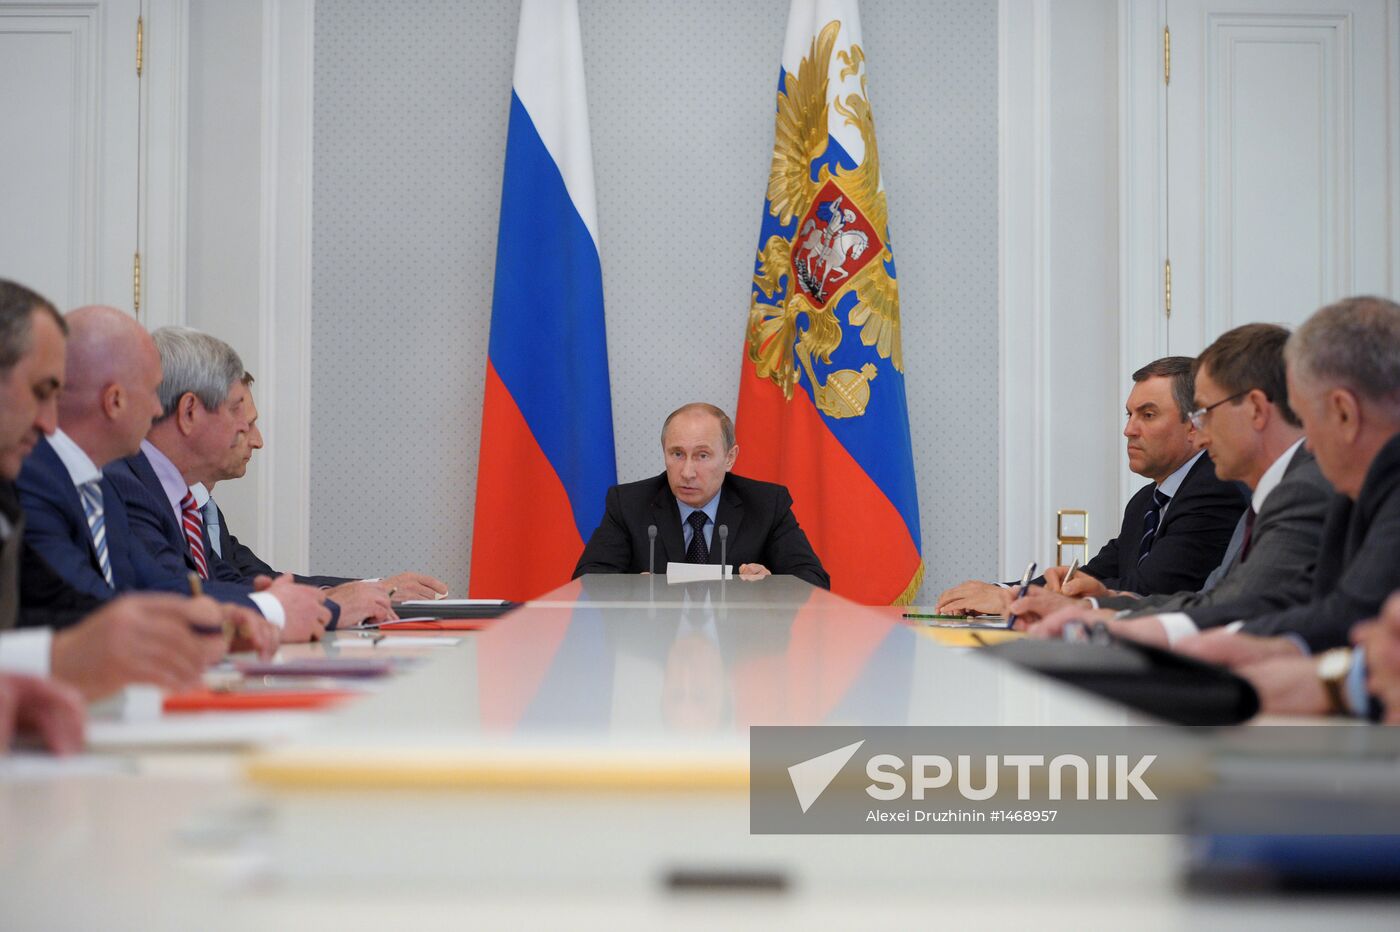 Vladimir Putin meets with leaders of Duma factions